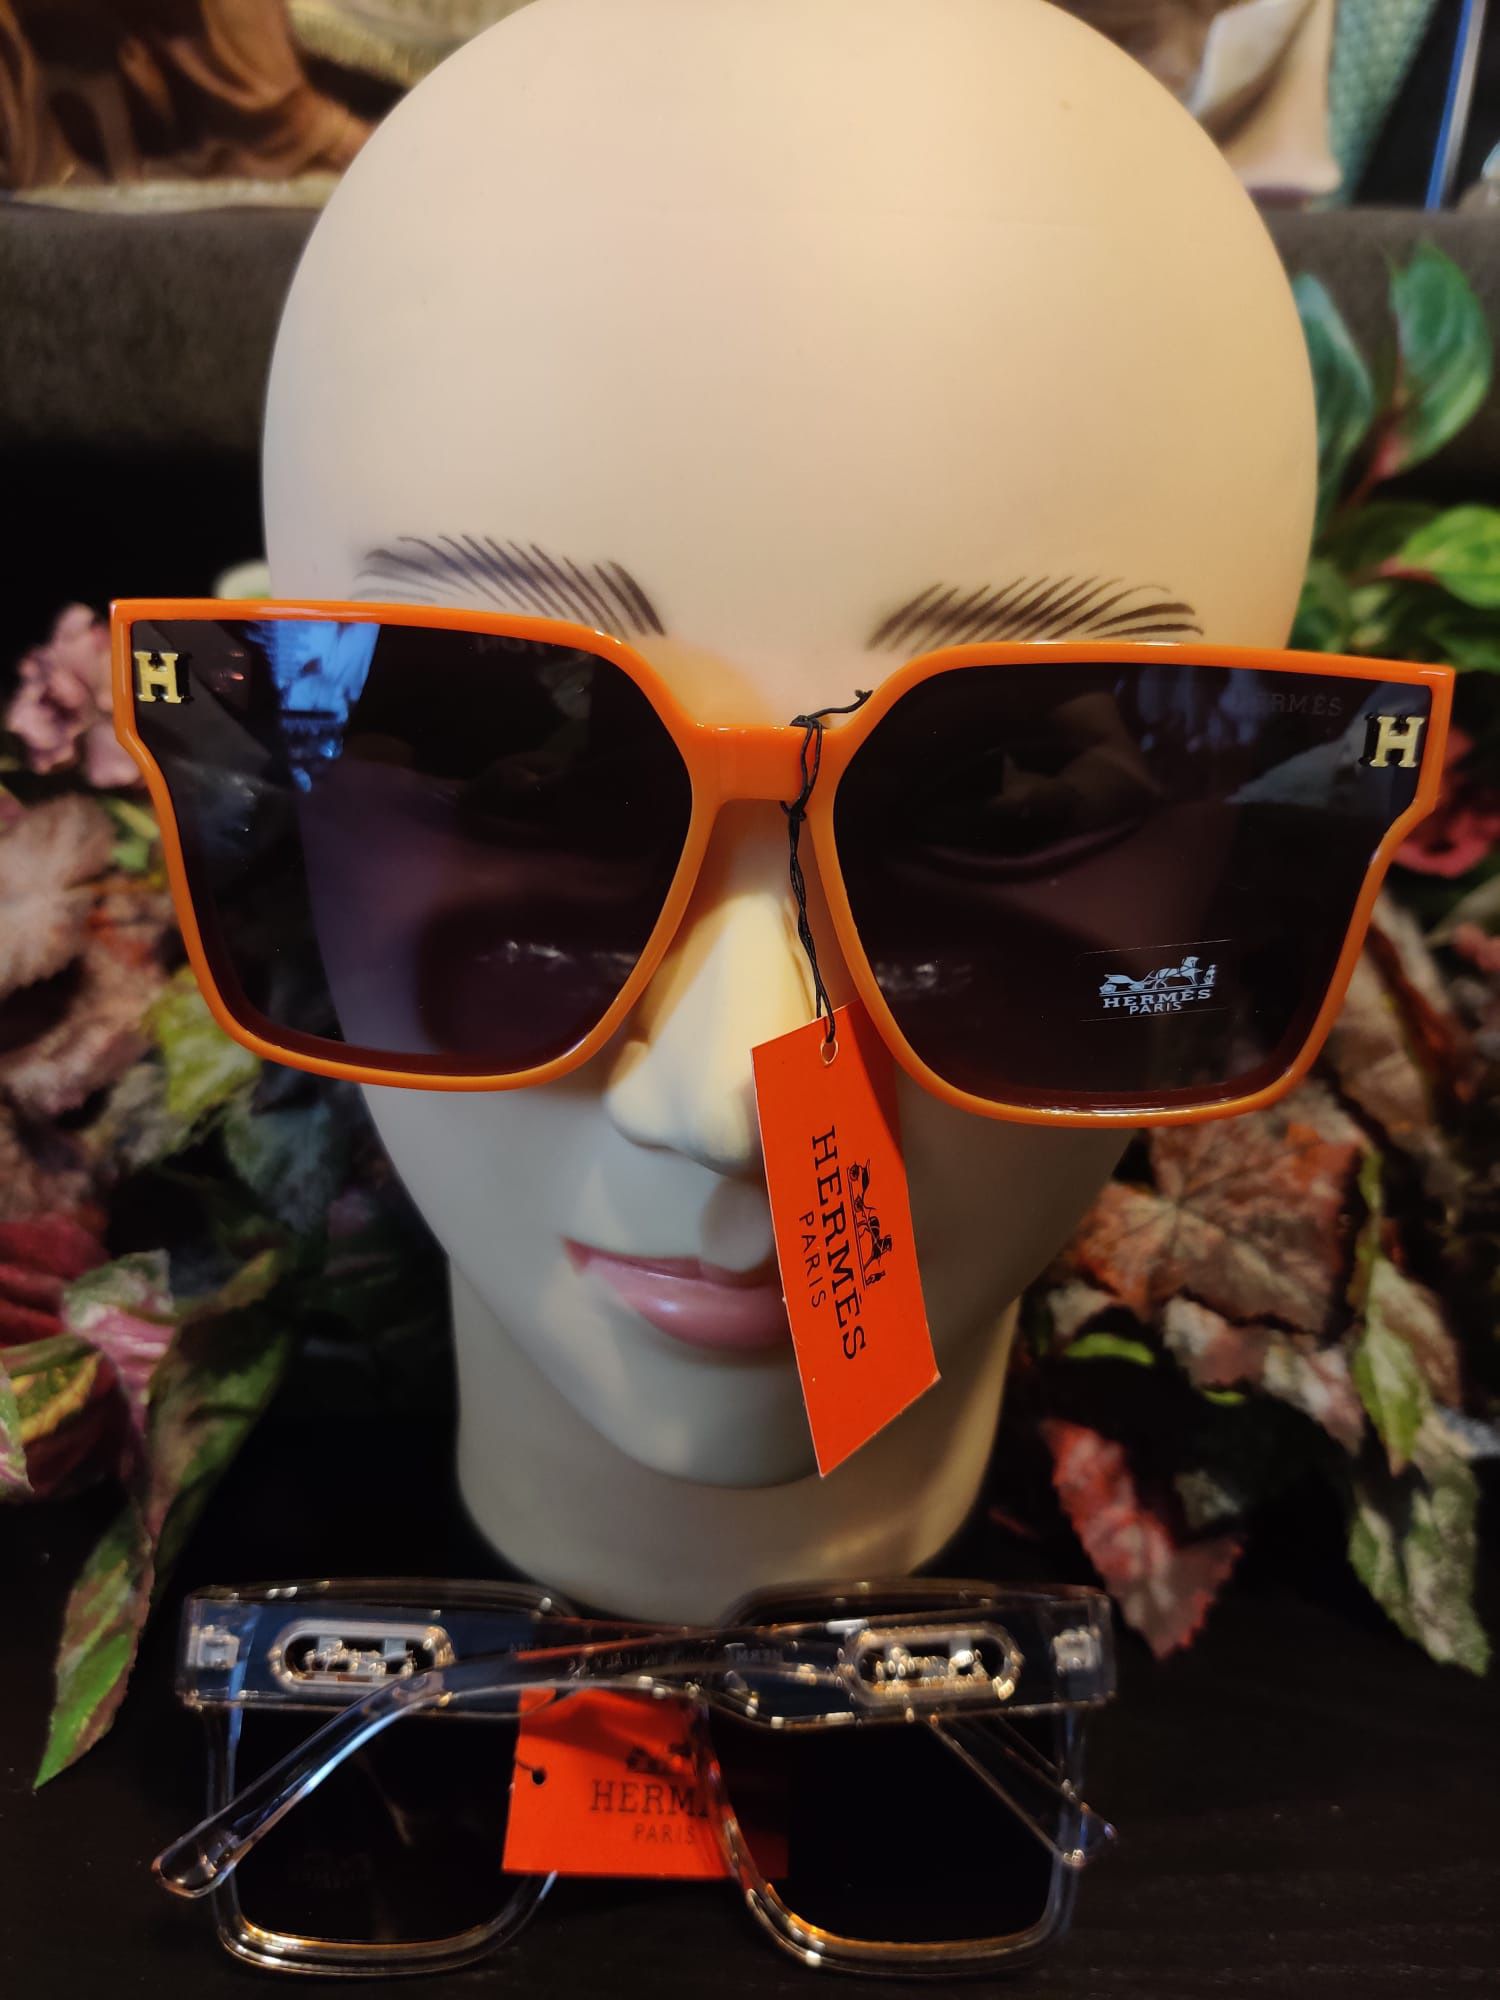 Herme’s Sunglasses Best Quality 